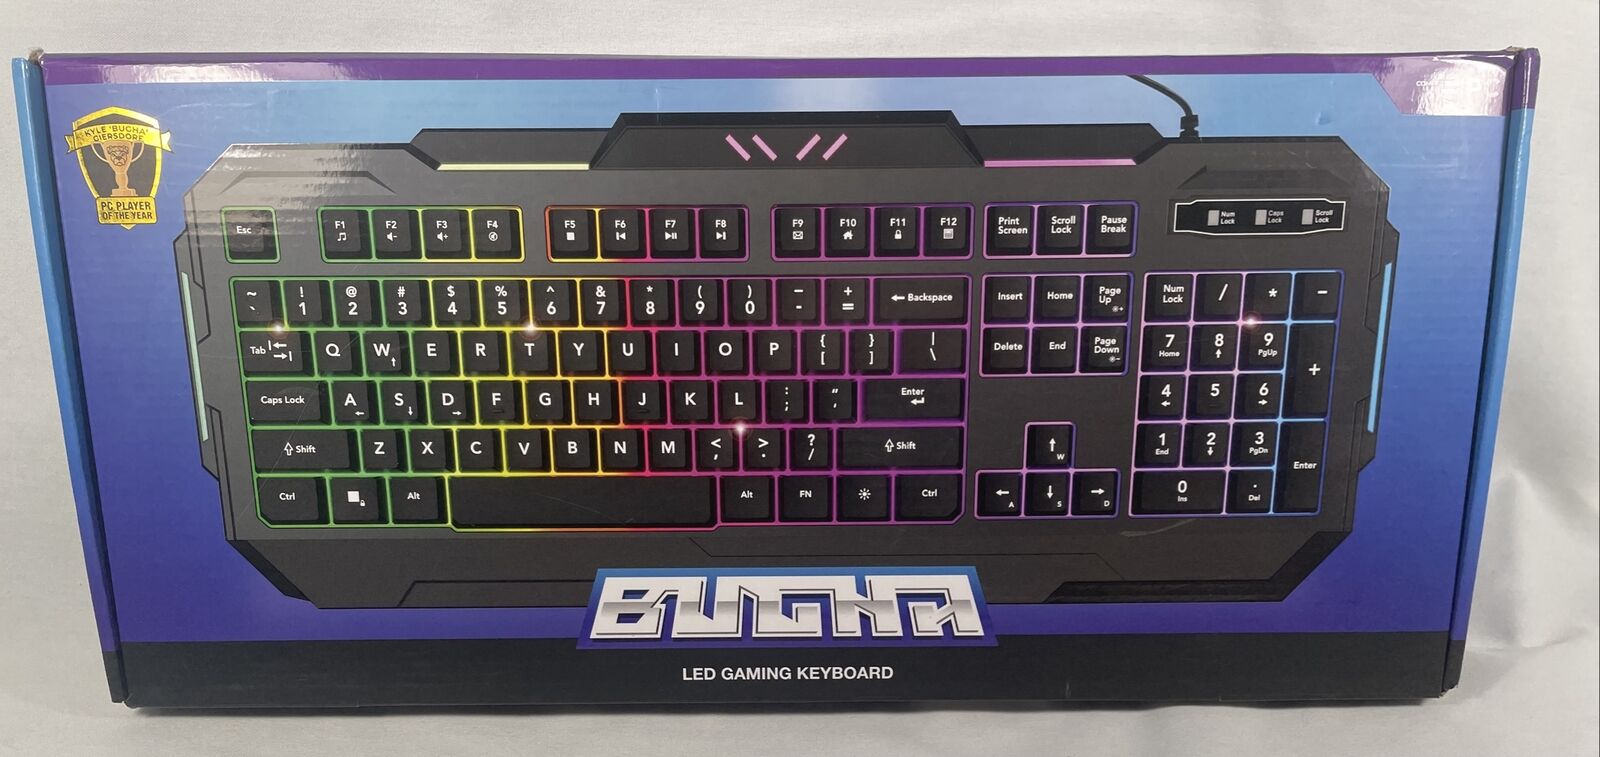 NIOB Bugha LED Gaming Keyboard Fortnite Champion PC Computer NEW IN OPEN BOX